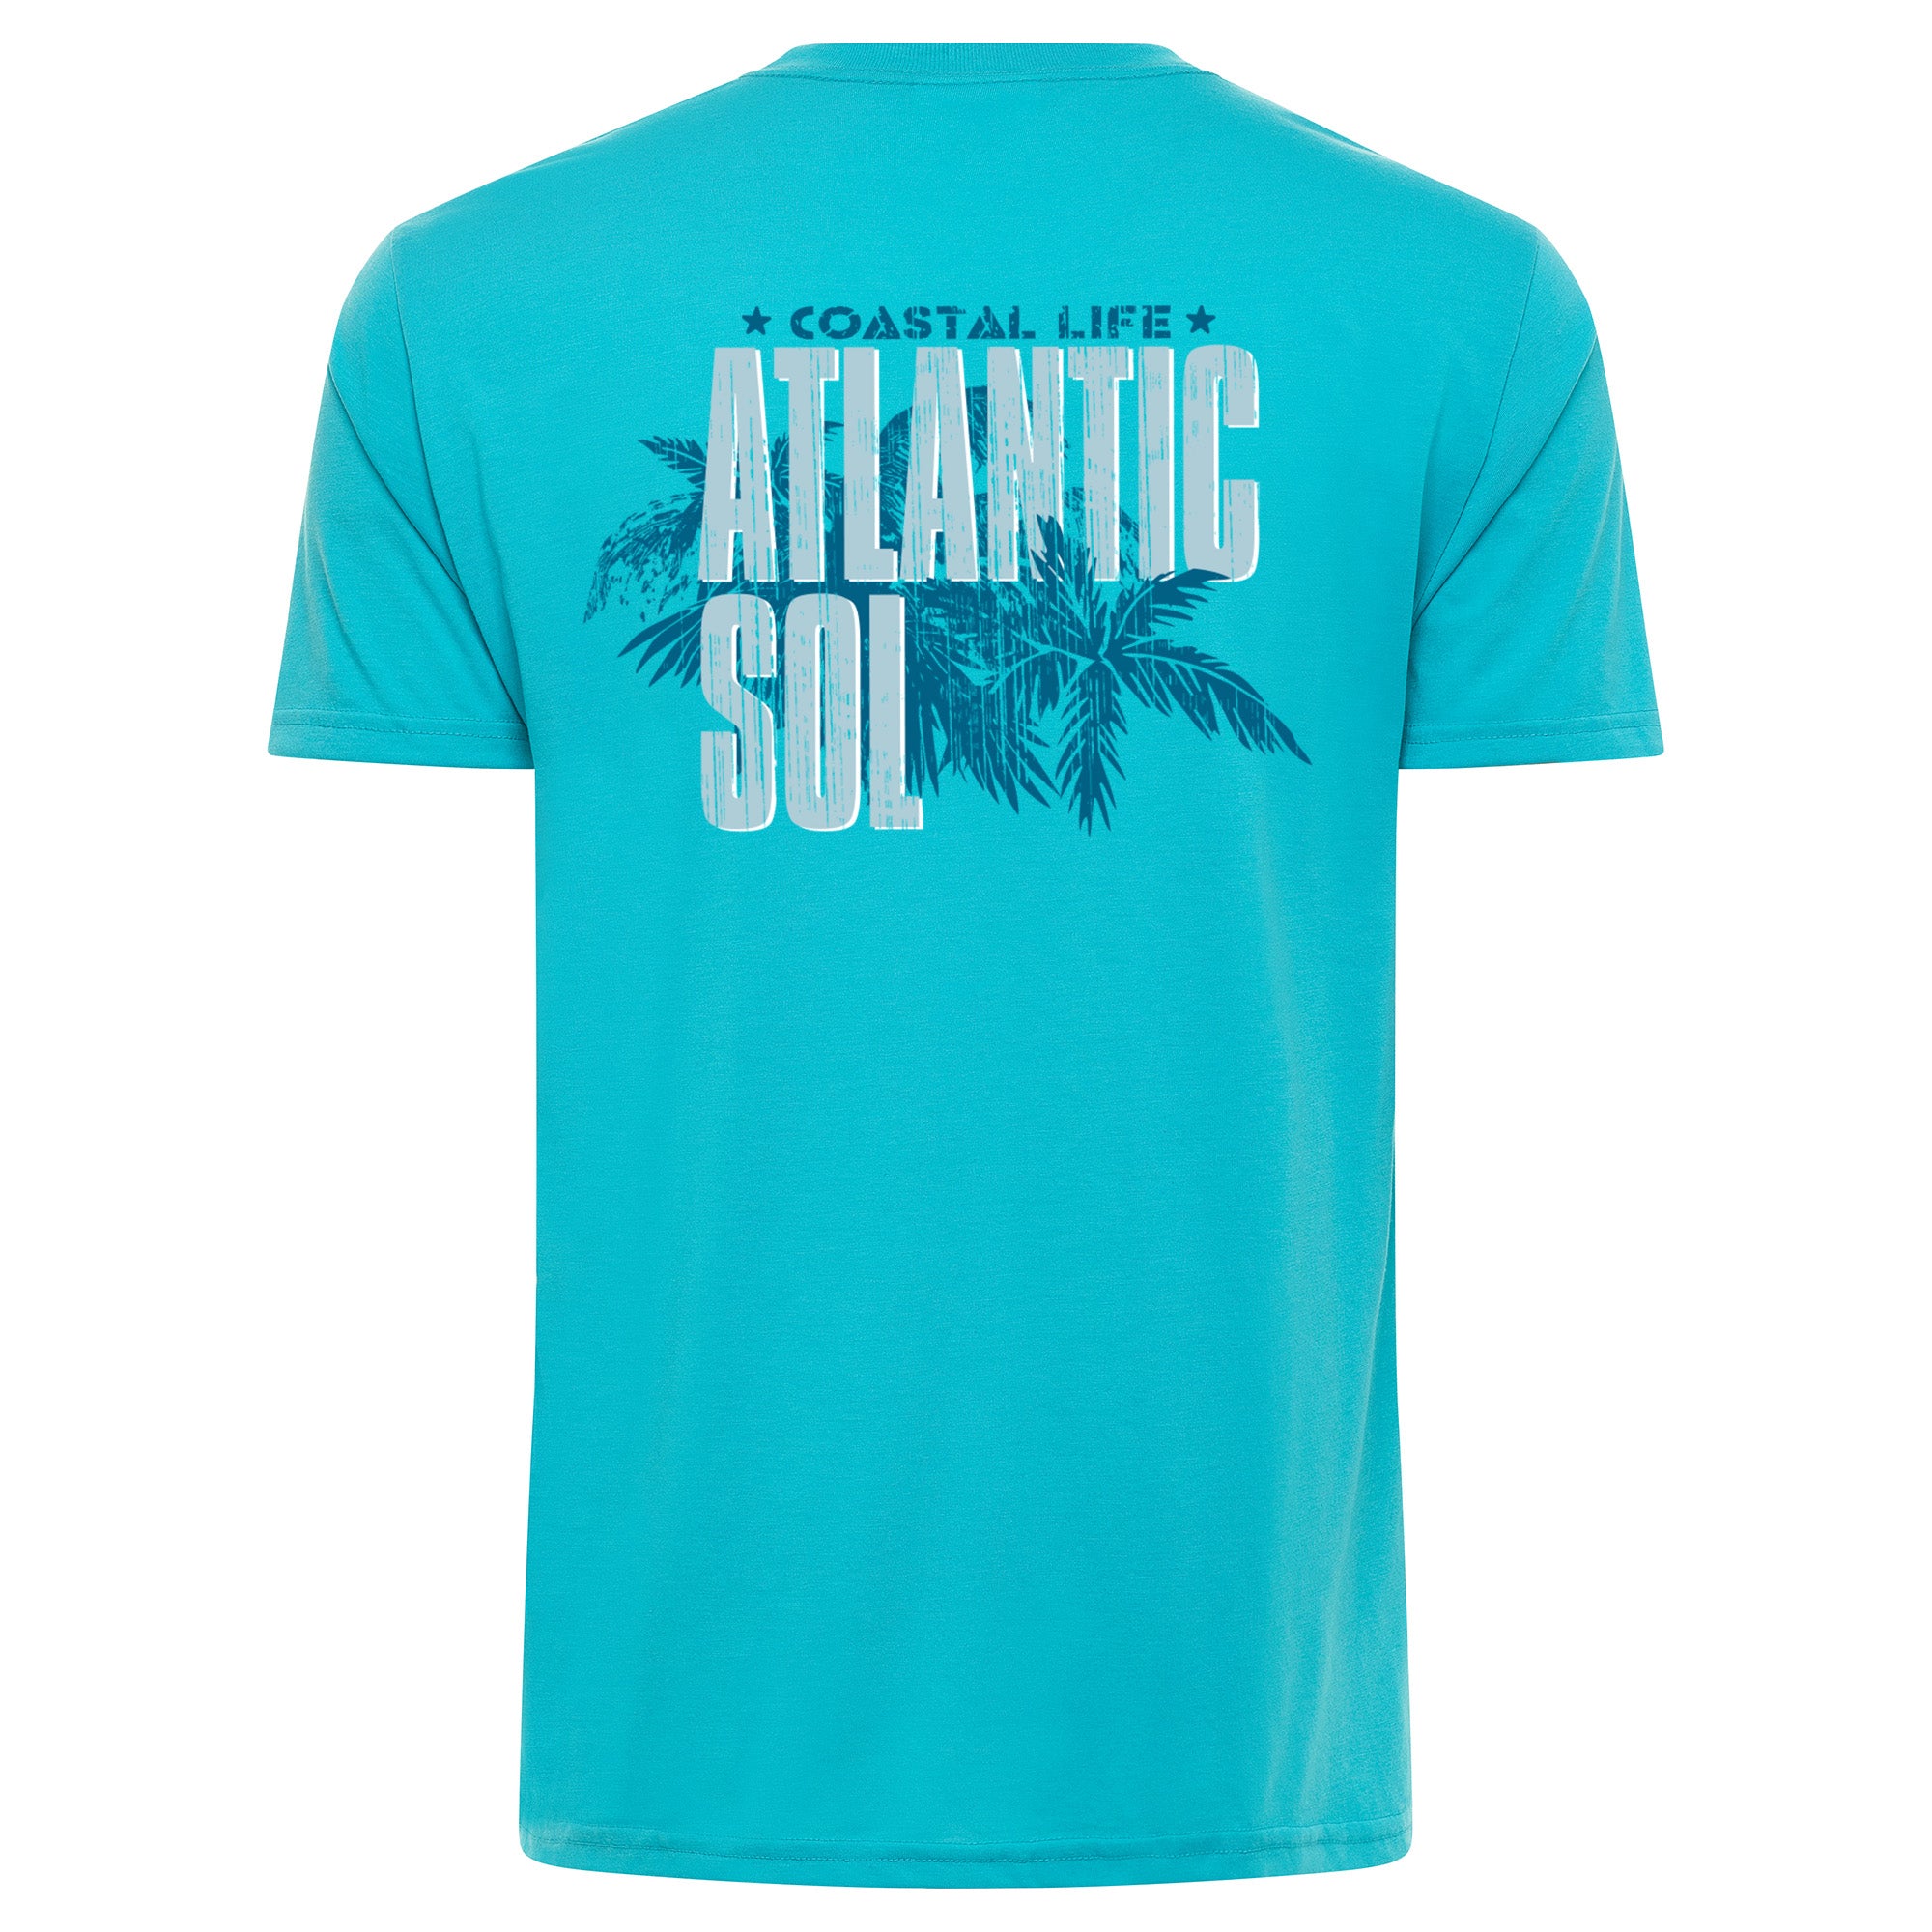 beach shirt, best shirts to wear to the beach, coastal clothing, vacation clothes, florida shirt